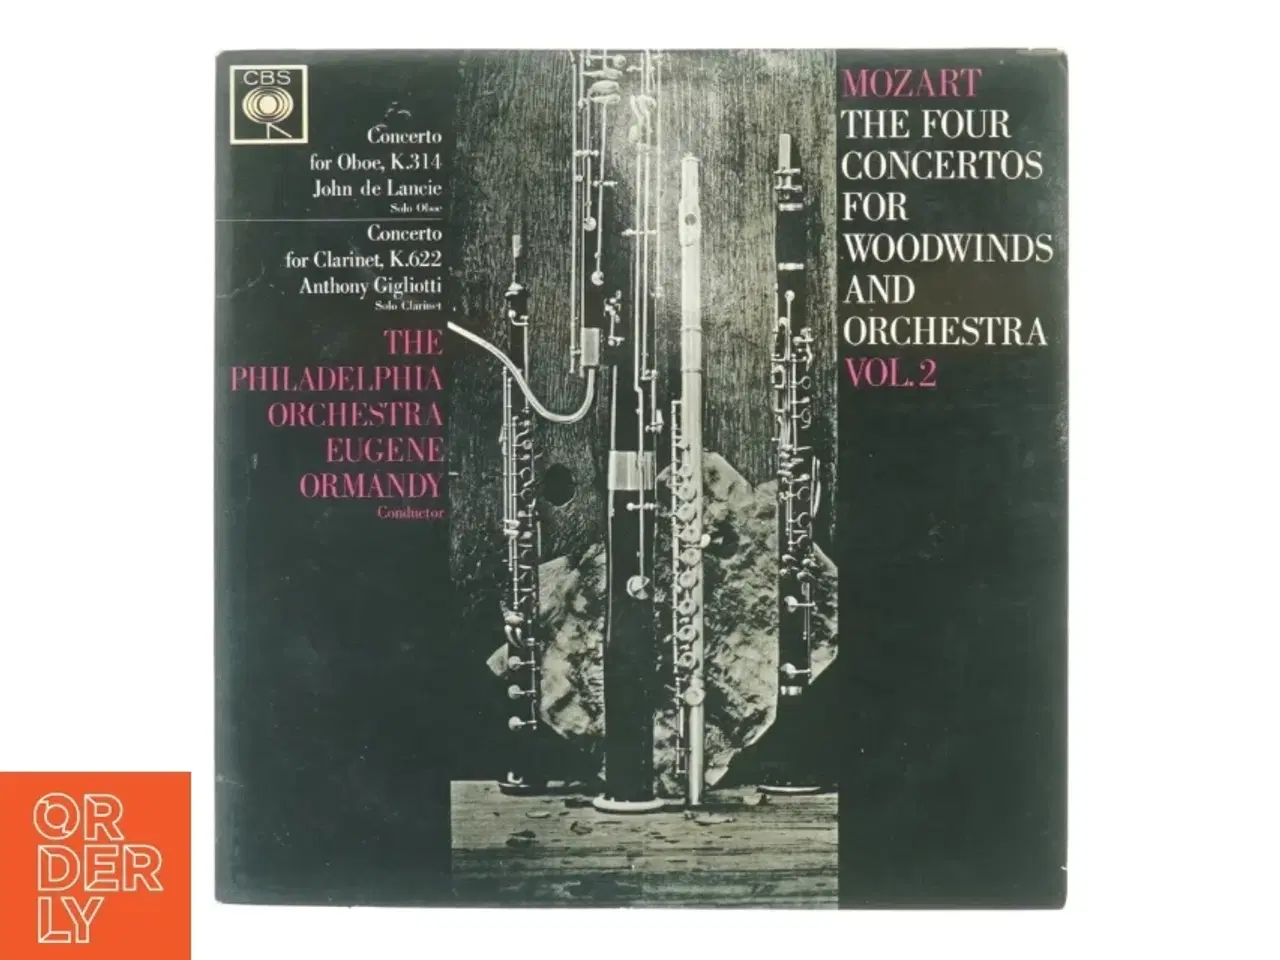 Billede 1 - Mozart, The four concertos for woodwinds and orchestra, vol 2 fra Cbs (str. 30 cm)